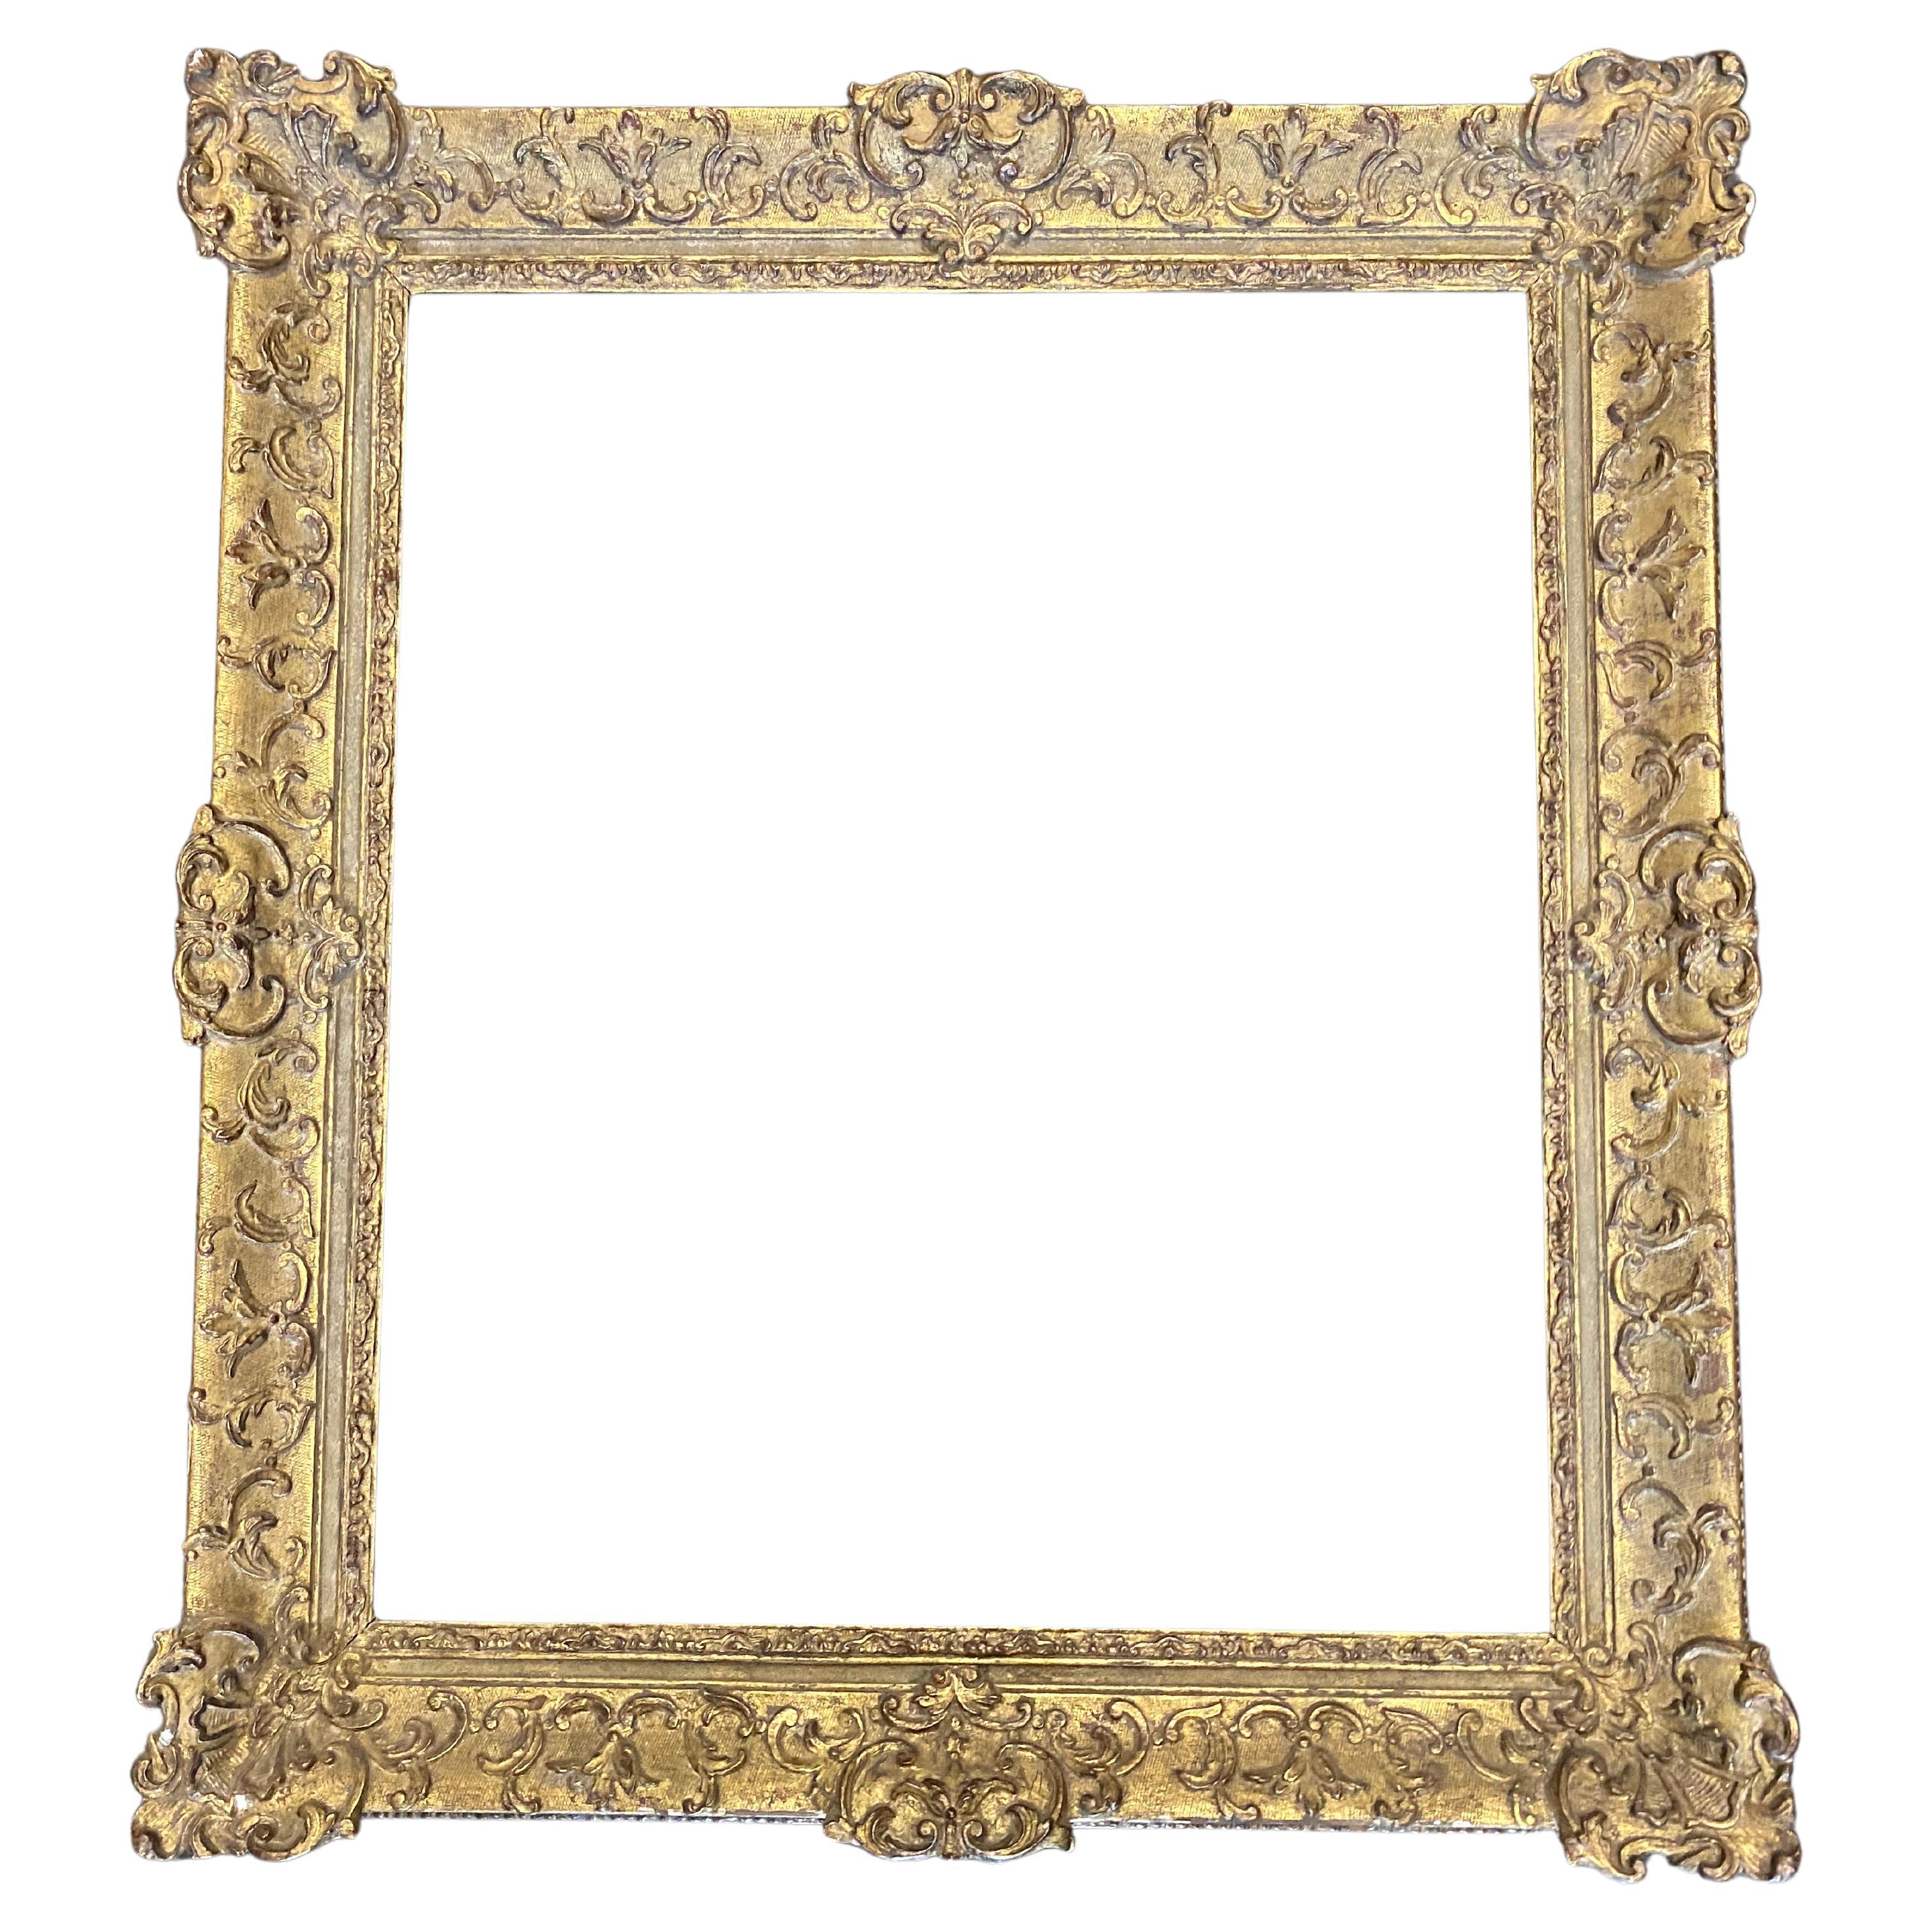 Large, Decorative Impressionist Wooden Frame, France Around 1880 For Sale